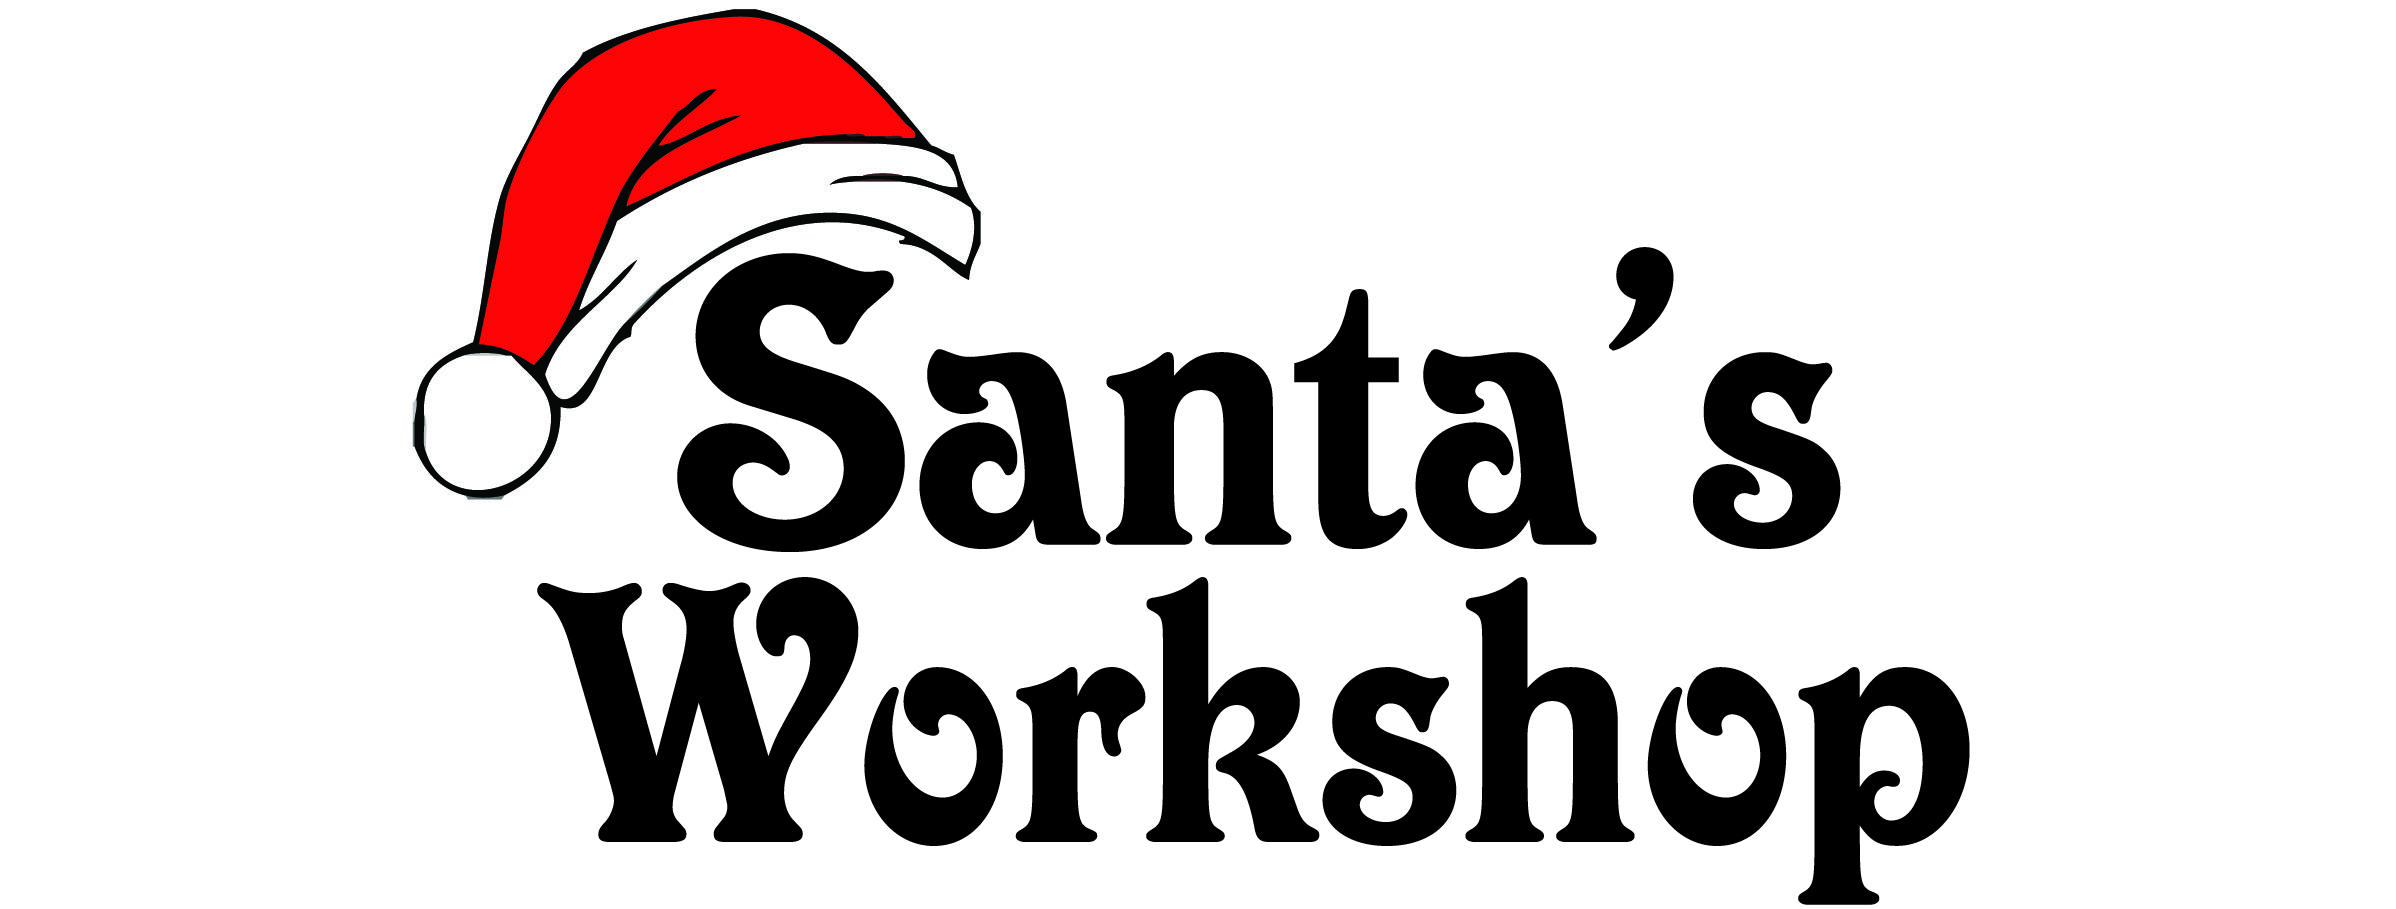 Clipart Santas Workshop